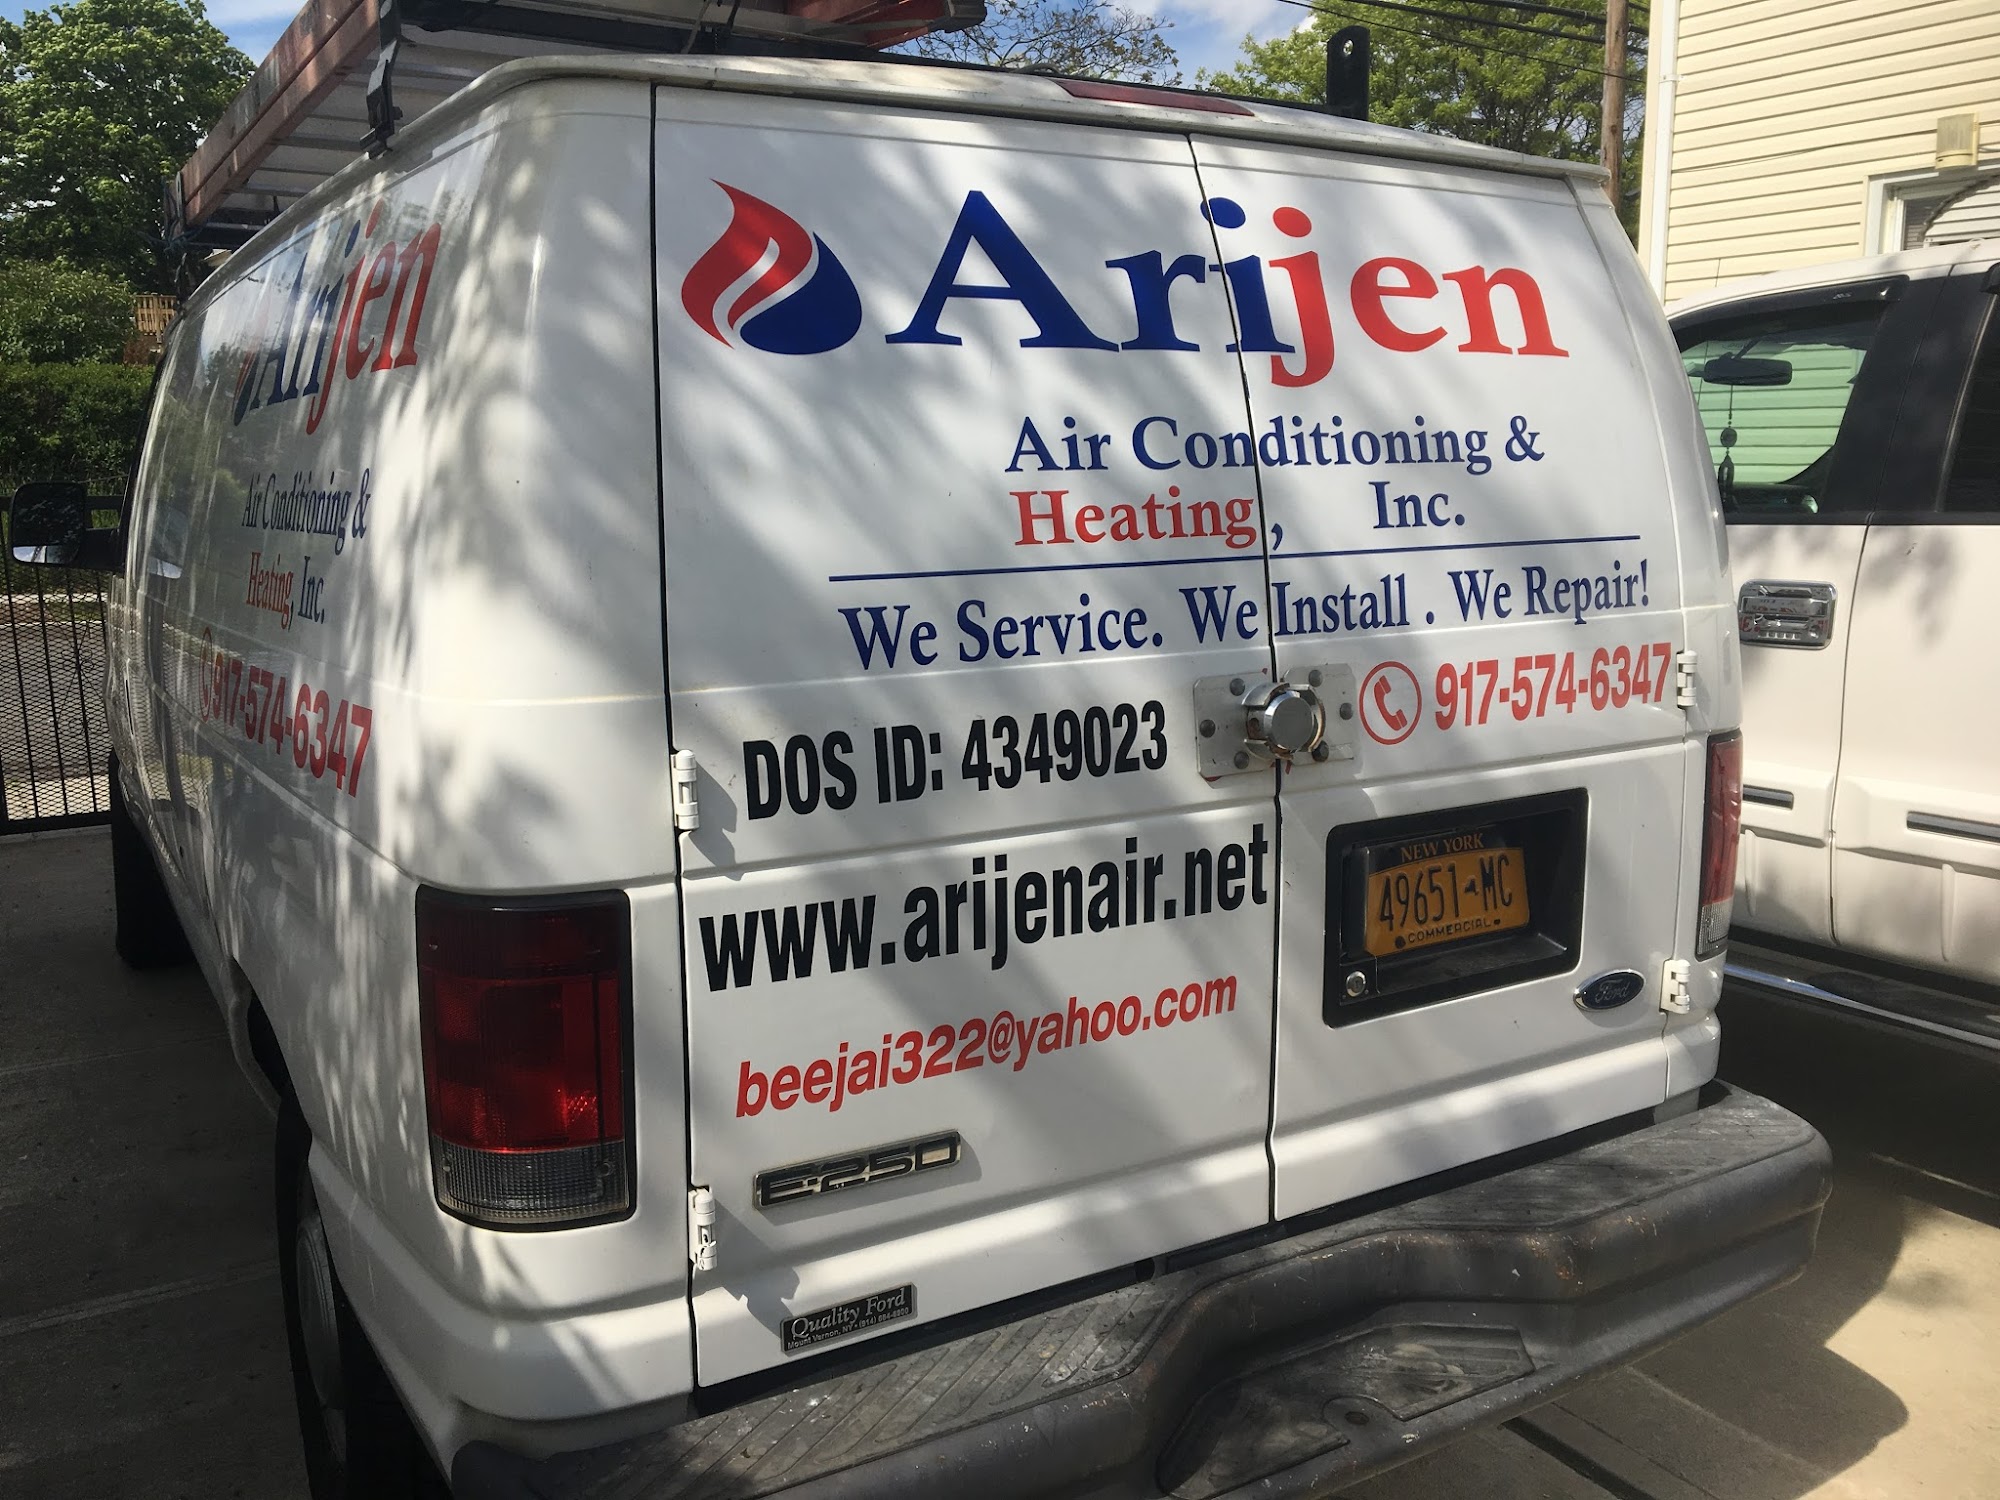 Arijen Air Conditioning & Heating, Inc.